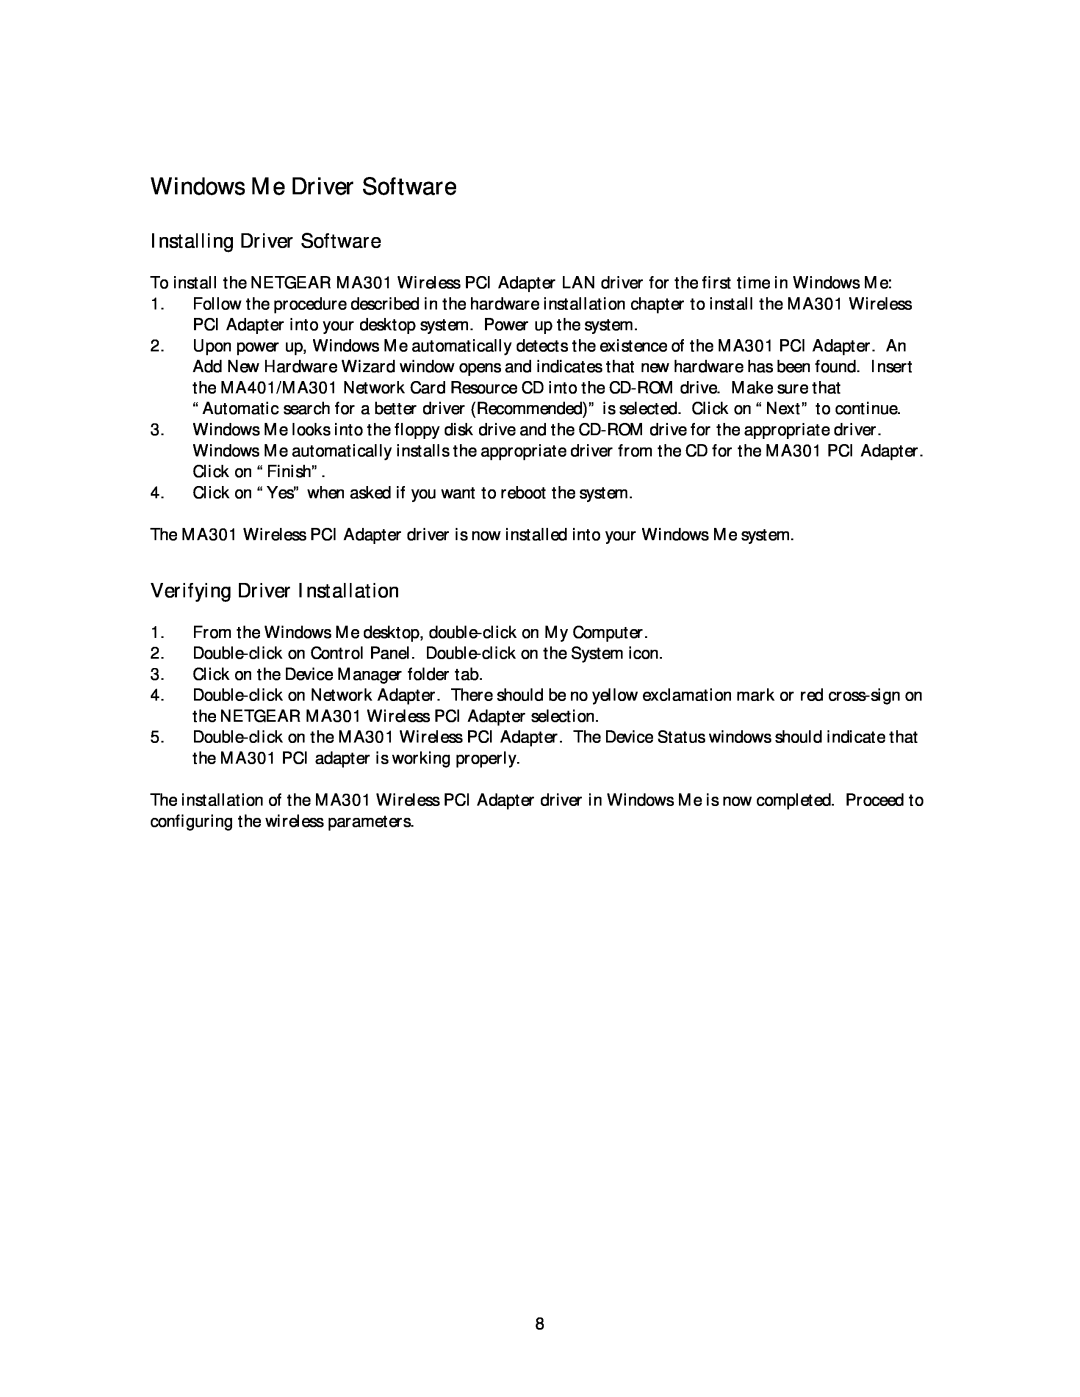 NETGEAR MA 301 manual Windows Me Driver Software, Installing Driver Software, Verifying Driver Installation 